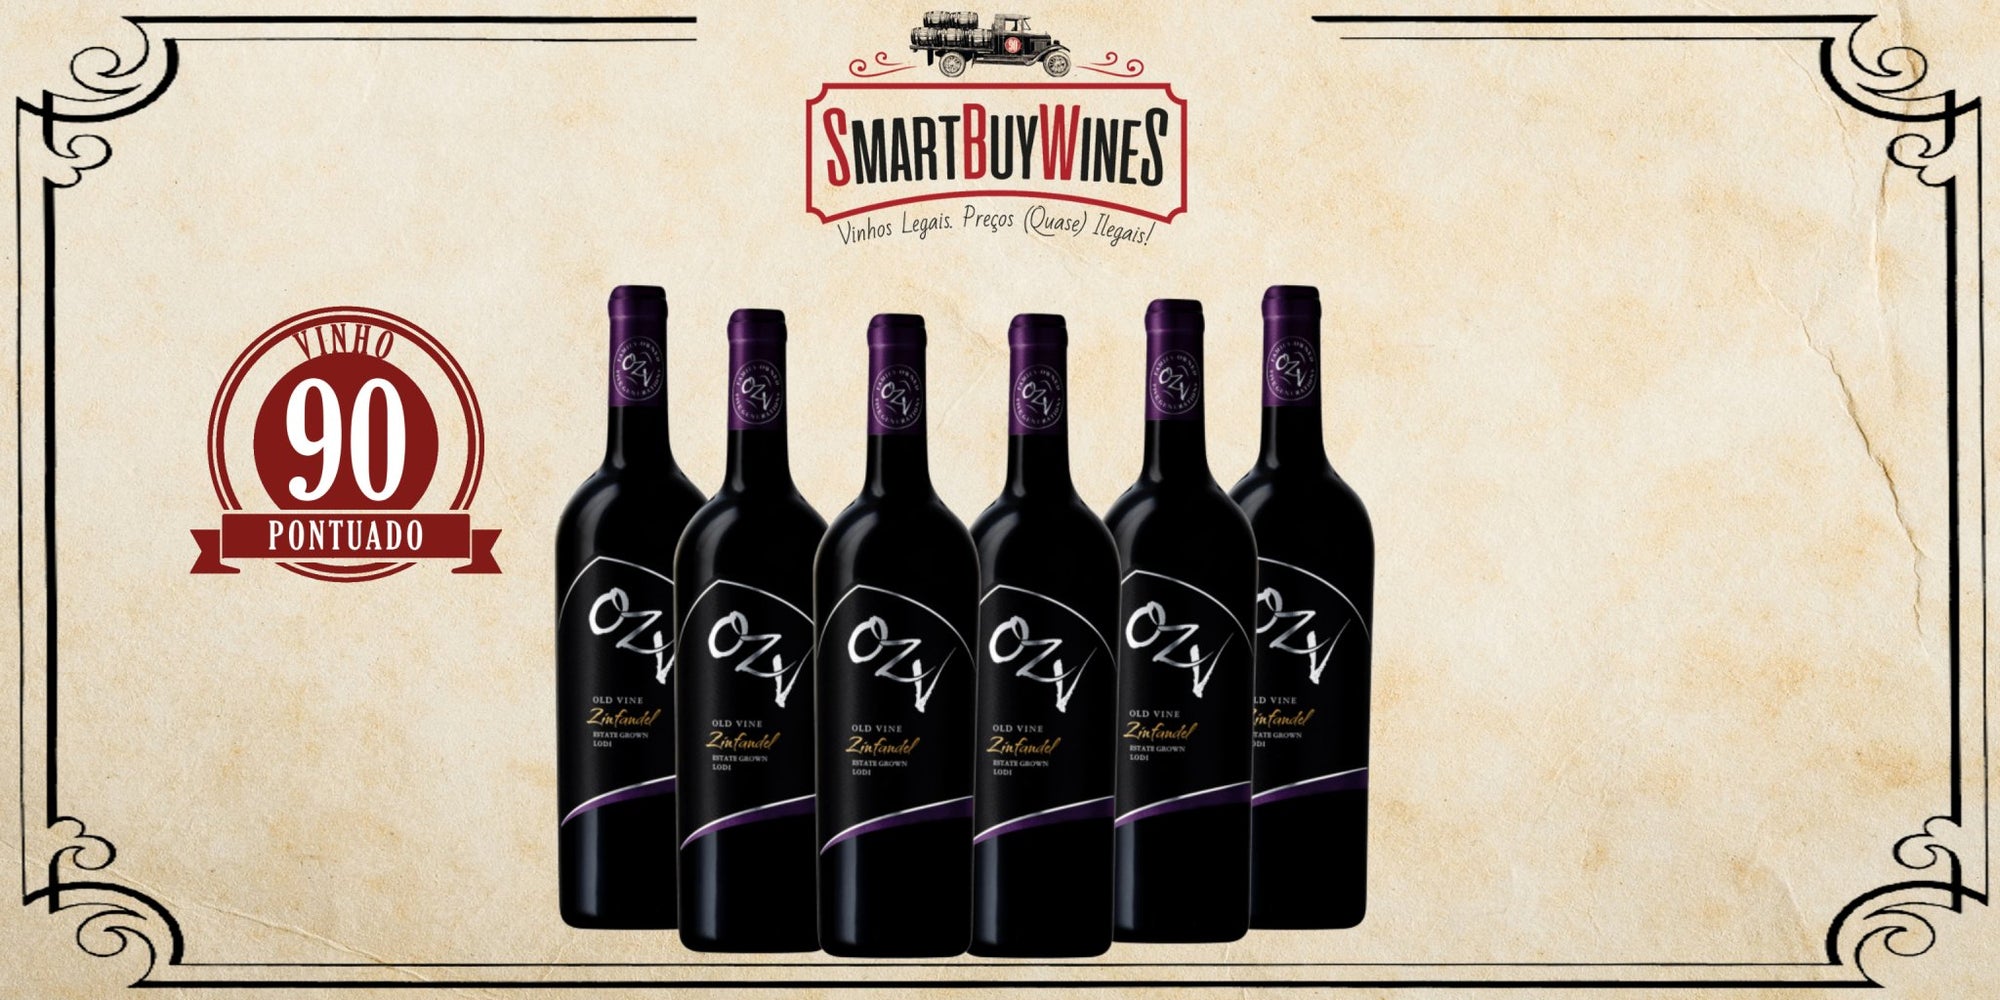 SMARTBOX 6 garrafas - OZV Old Vine Zinfandel, Lodi, California 2019 - SmartBuyWines.com.br